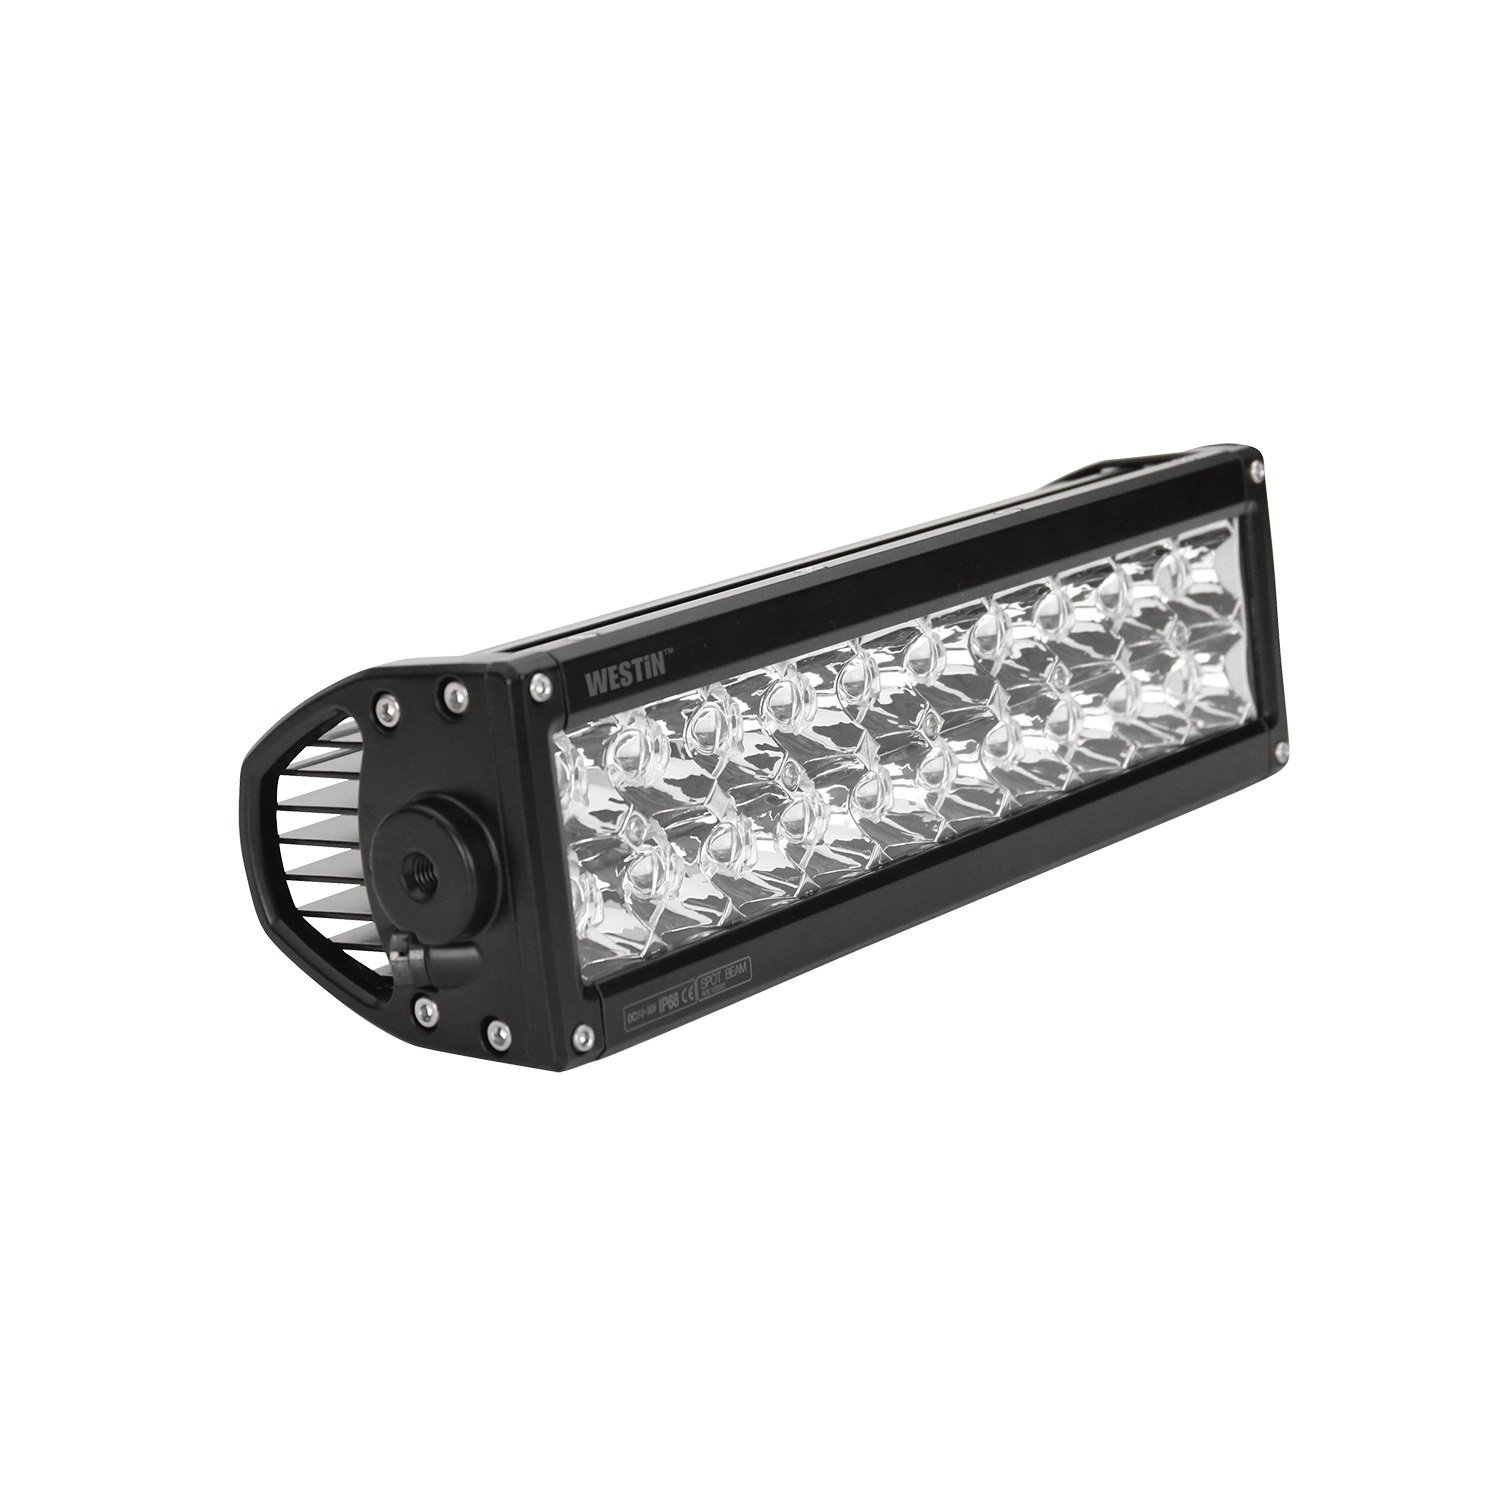 Low-Profile Double-Row LED Light Bar 10" Length